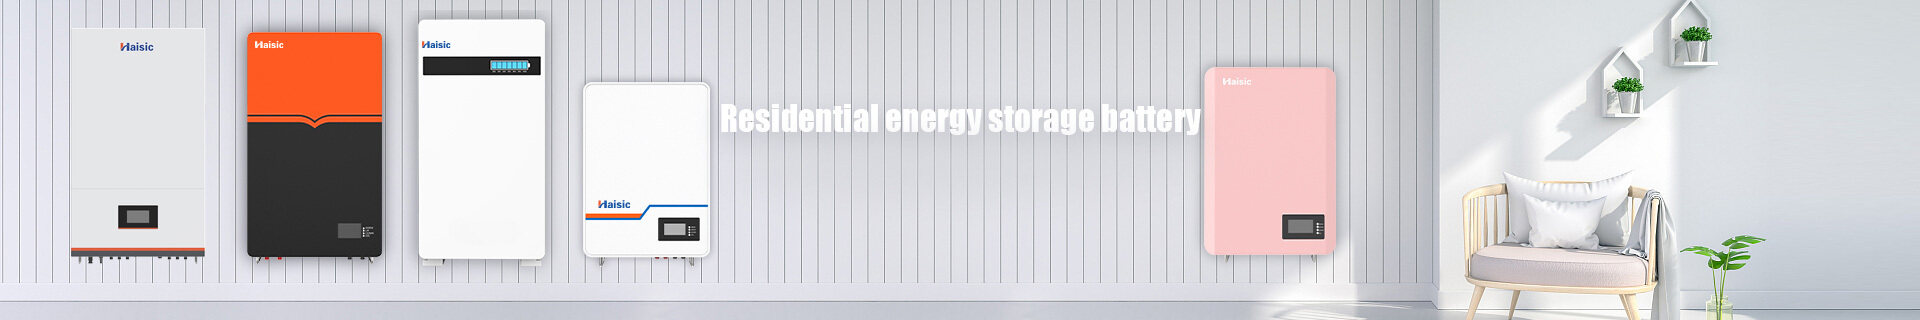 home solar battery backup system, home solar battery storage system, home solar battery storage systems